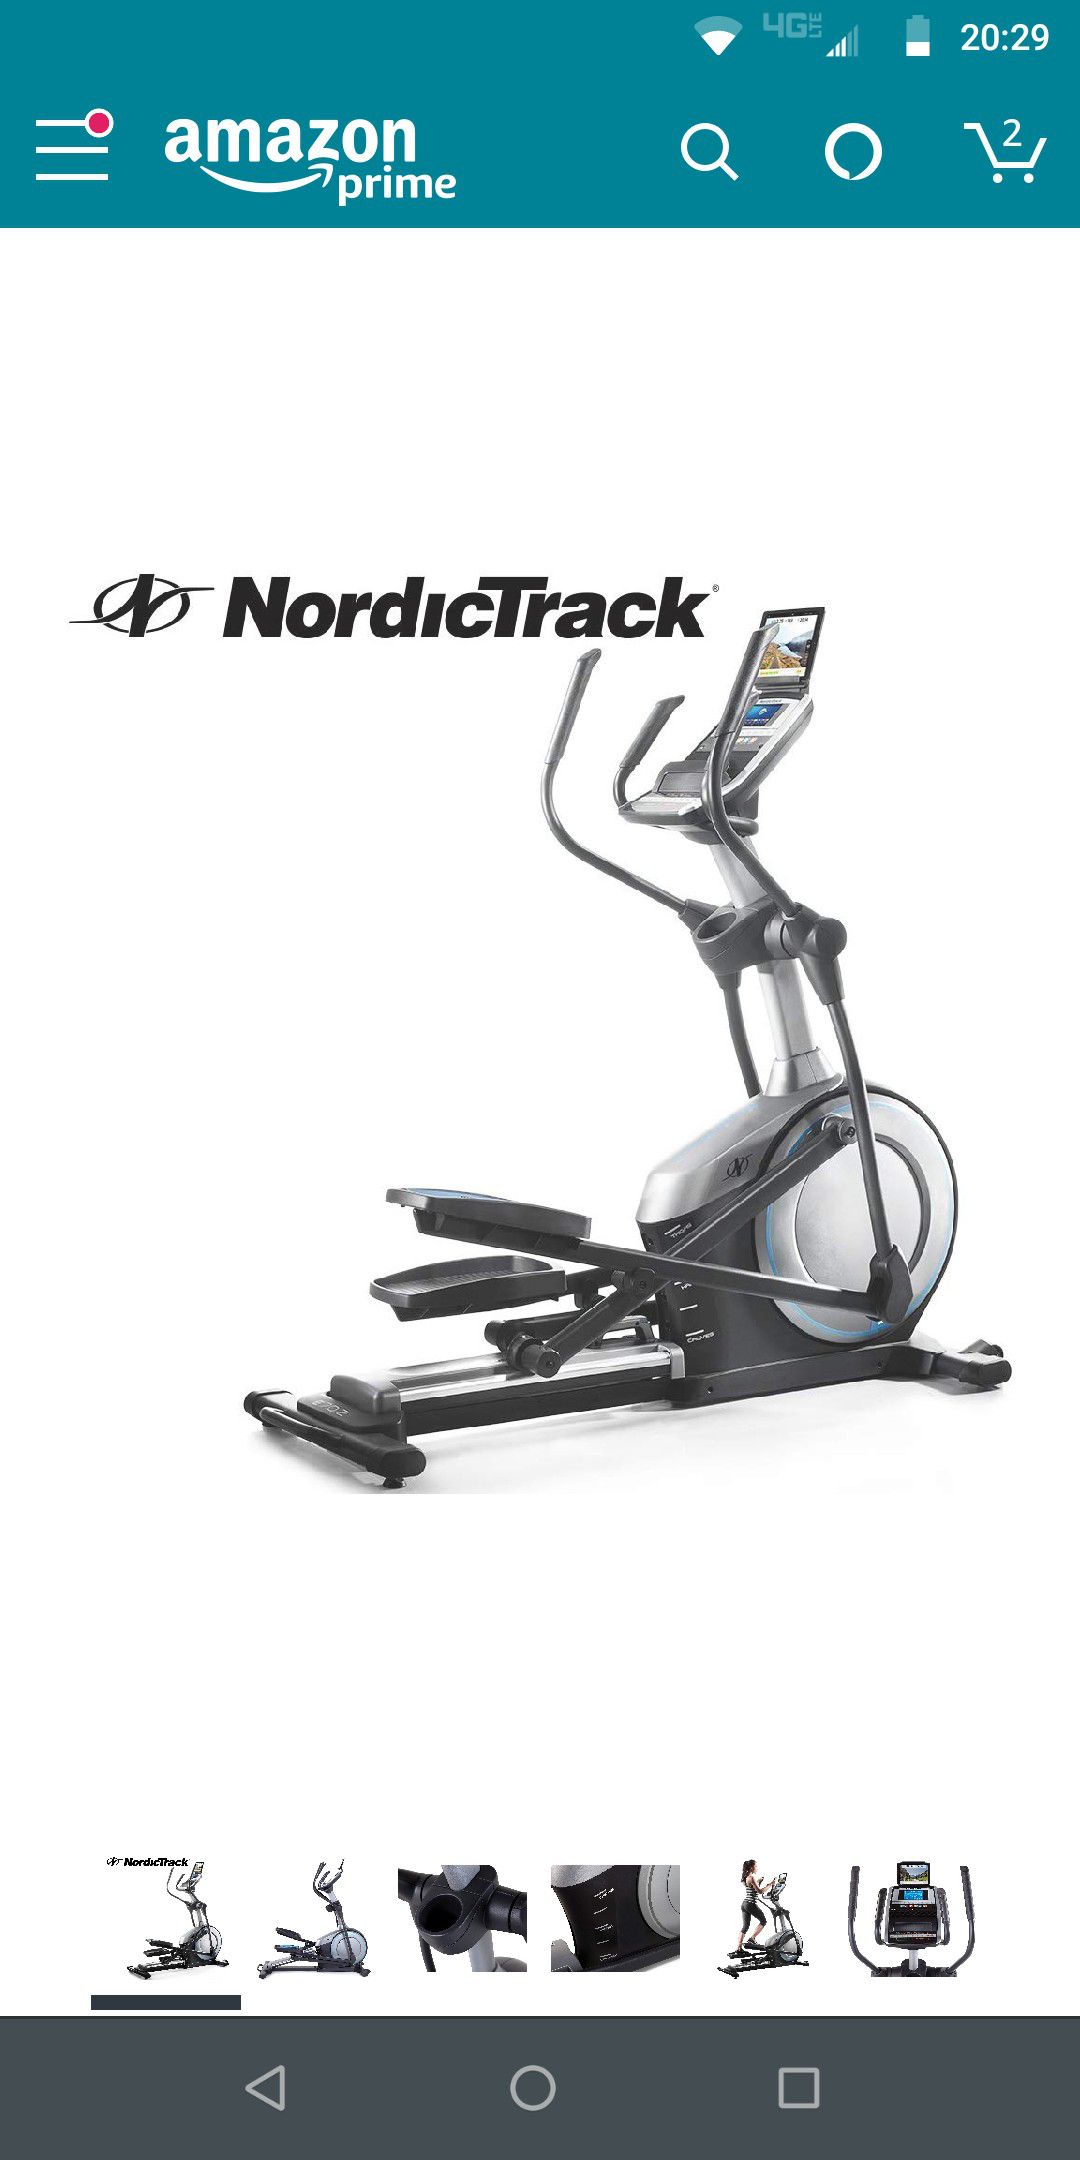 NordicTrack E 7.0 Z Elliptical Trainer